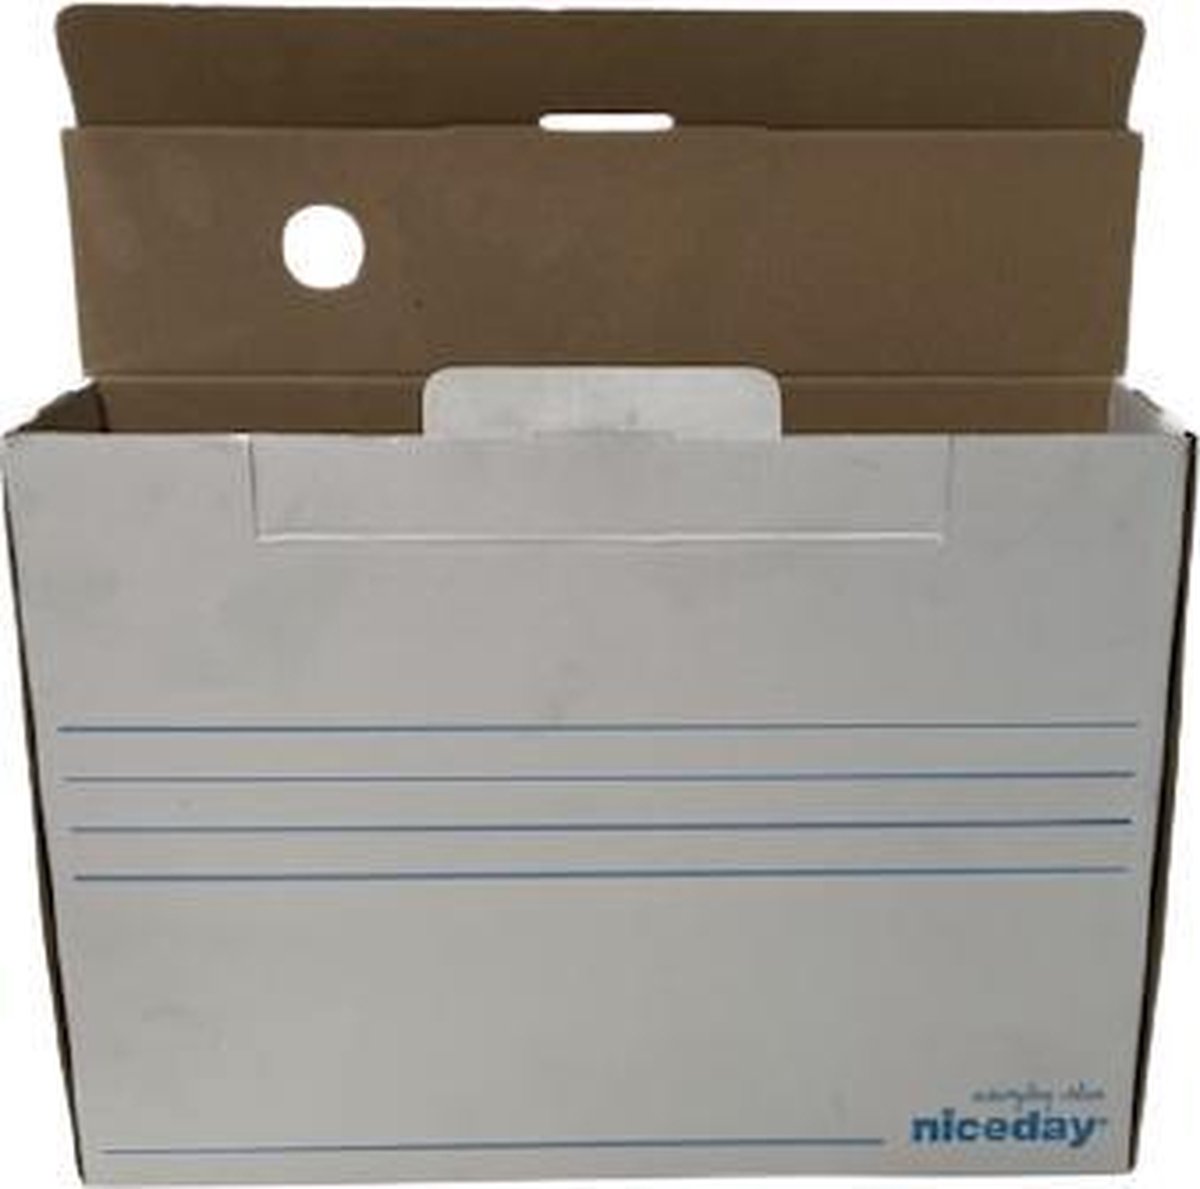 Niceday Boites d'archives A4 Carton 33,5 x 24,5 x 8 cm - 50 pièces | bol.com